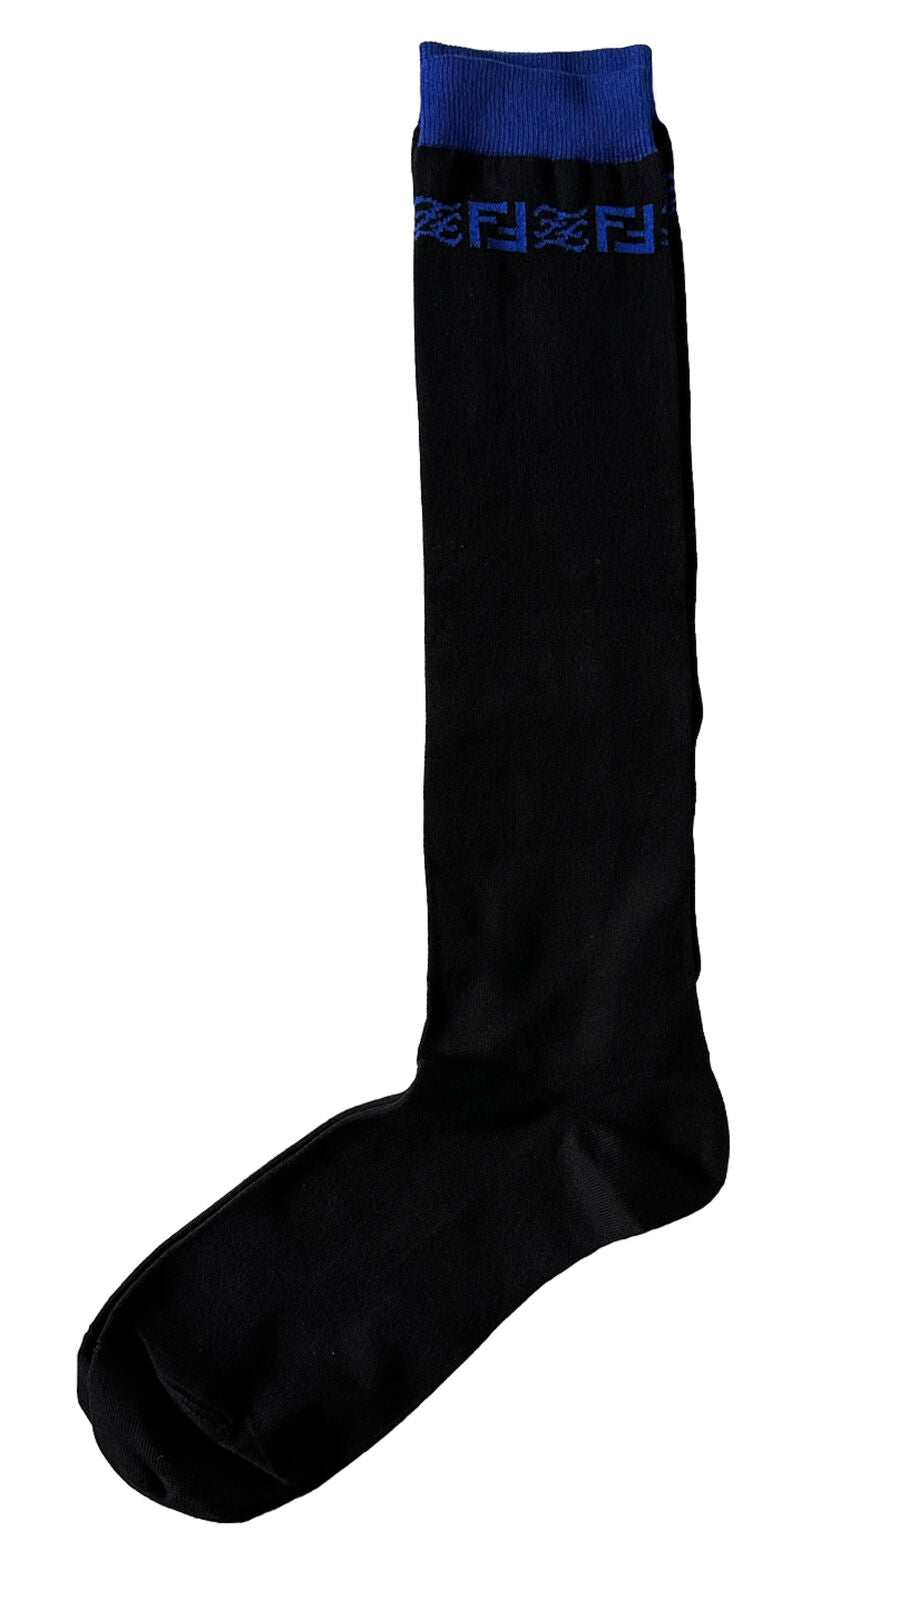 NWT $260 Fendi FF Karligraphy Socks Black Large Made in Italy